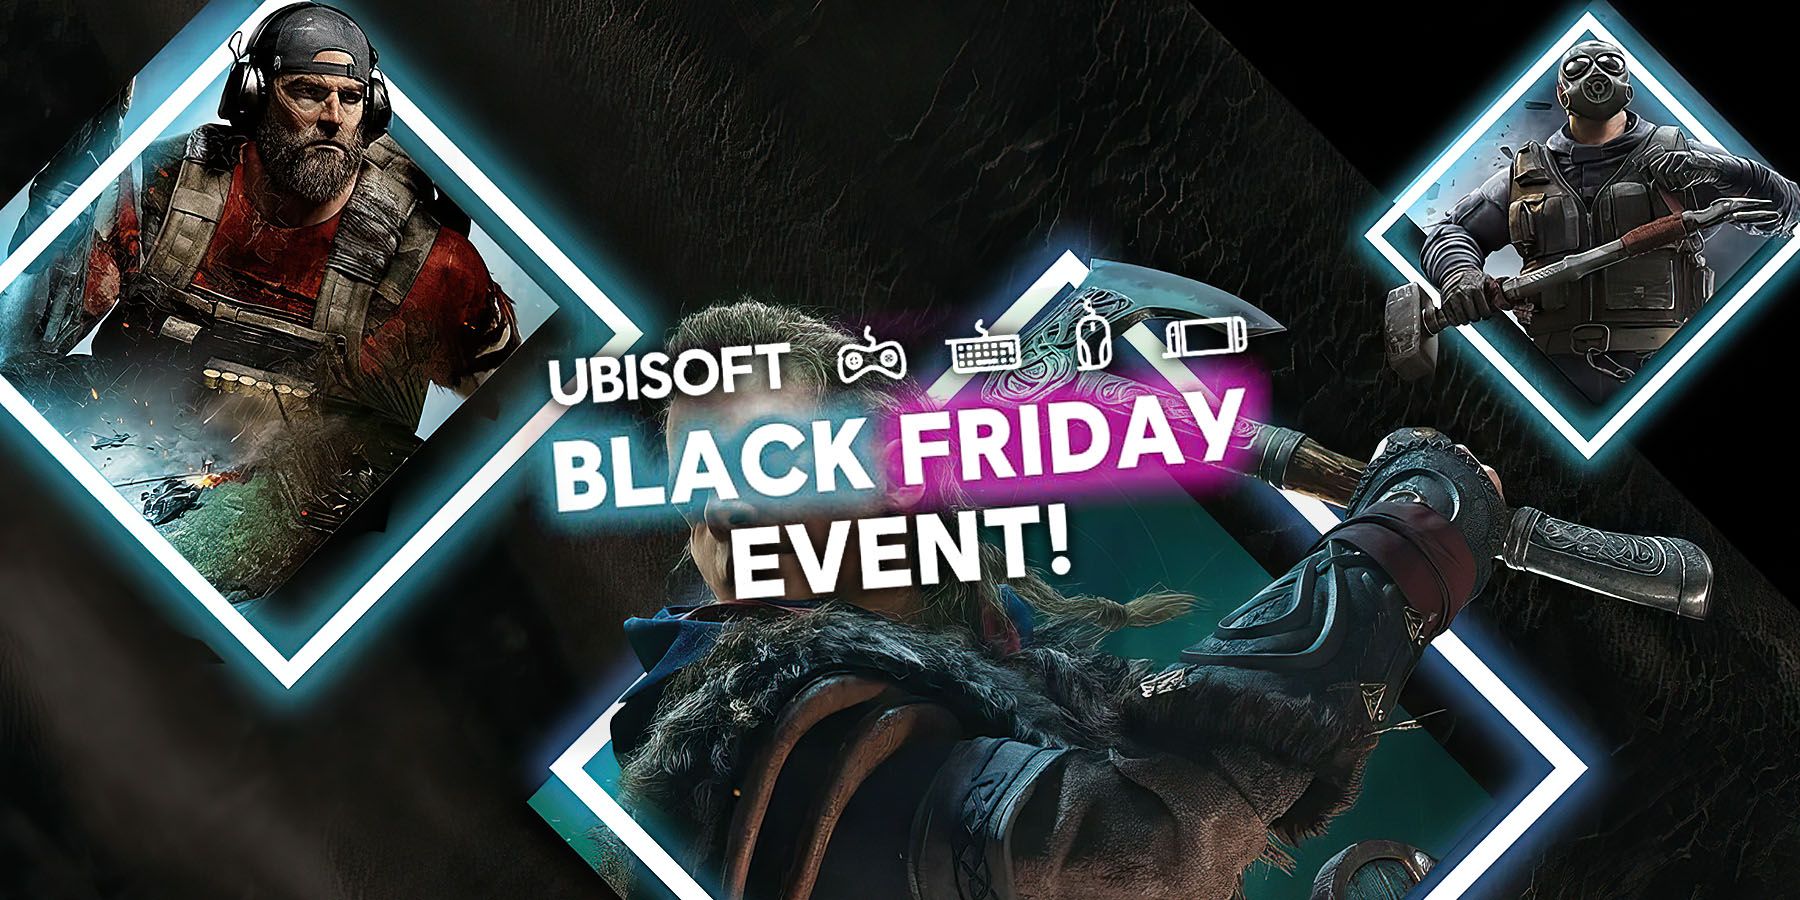 ubisoft has huge discounts black friday event